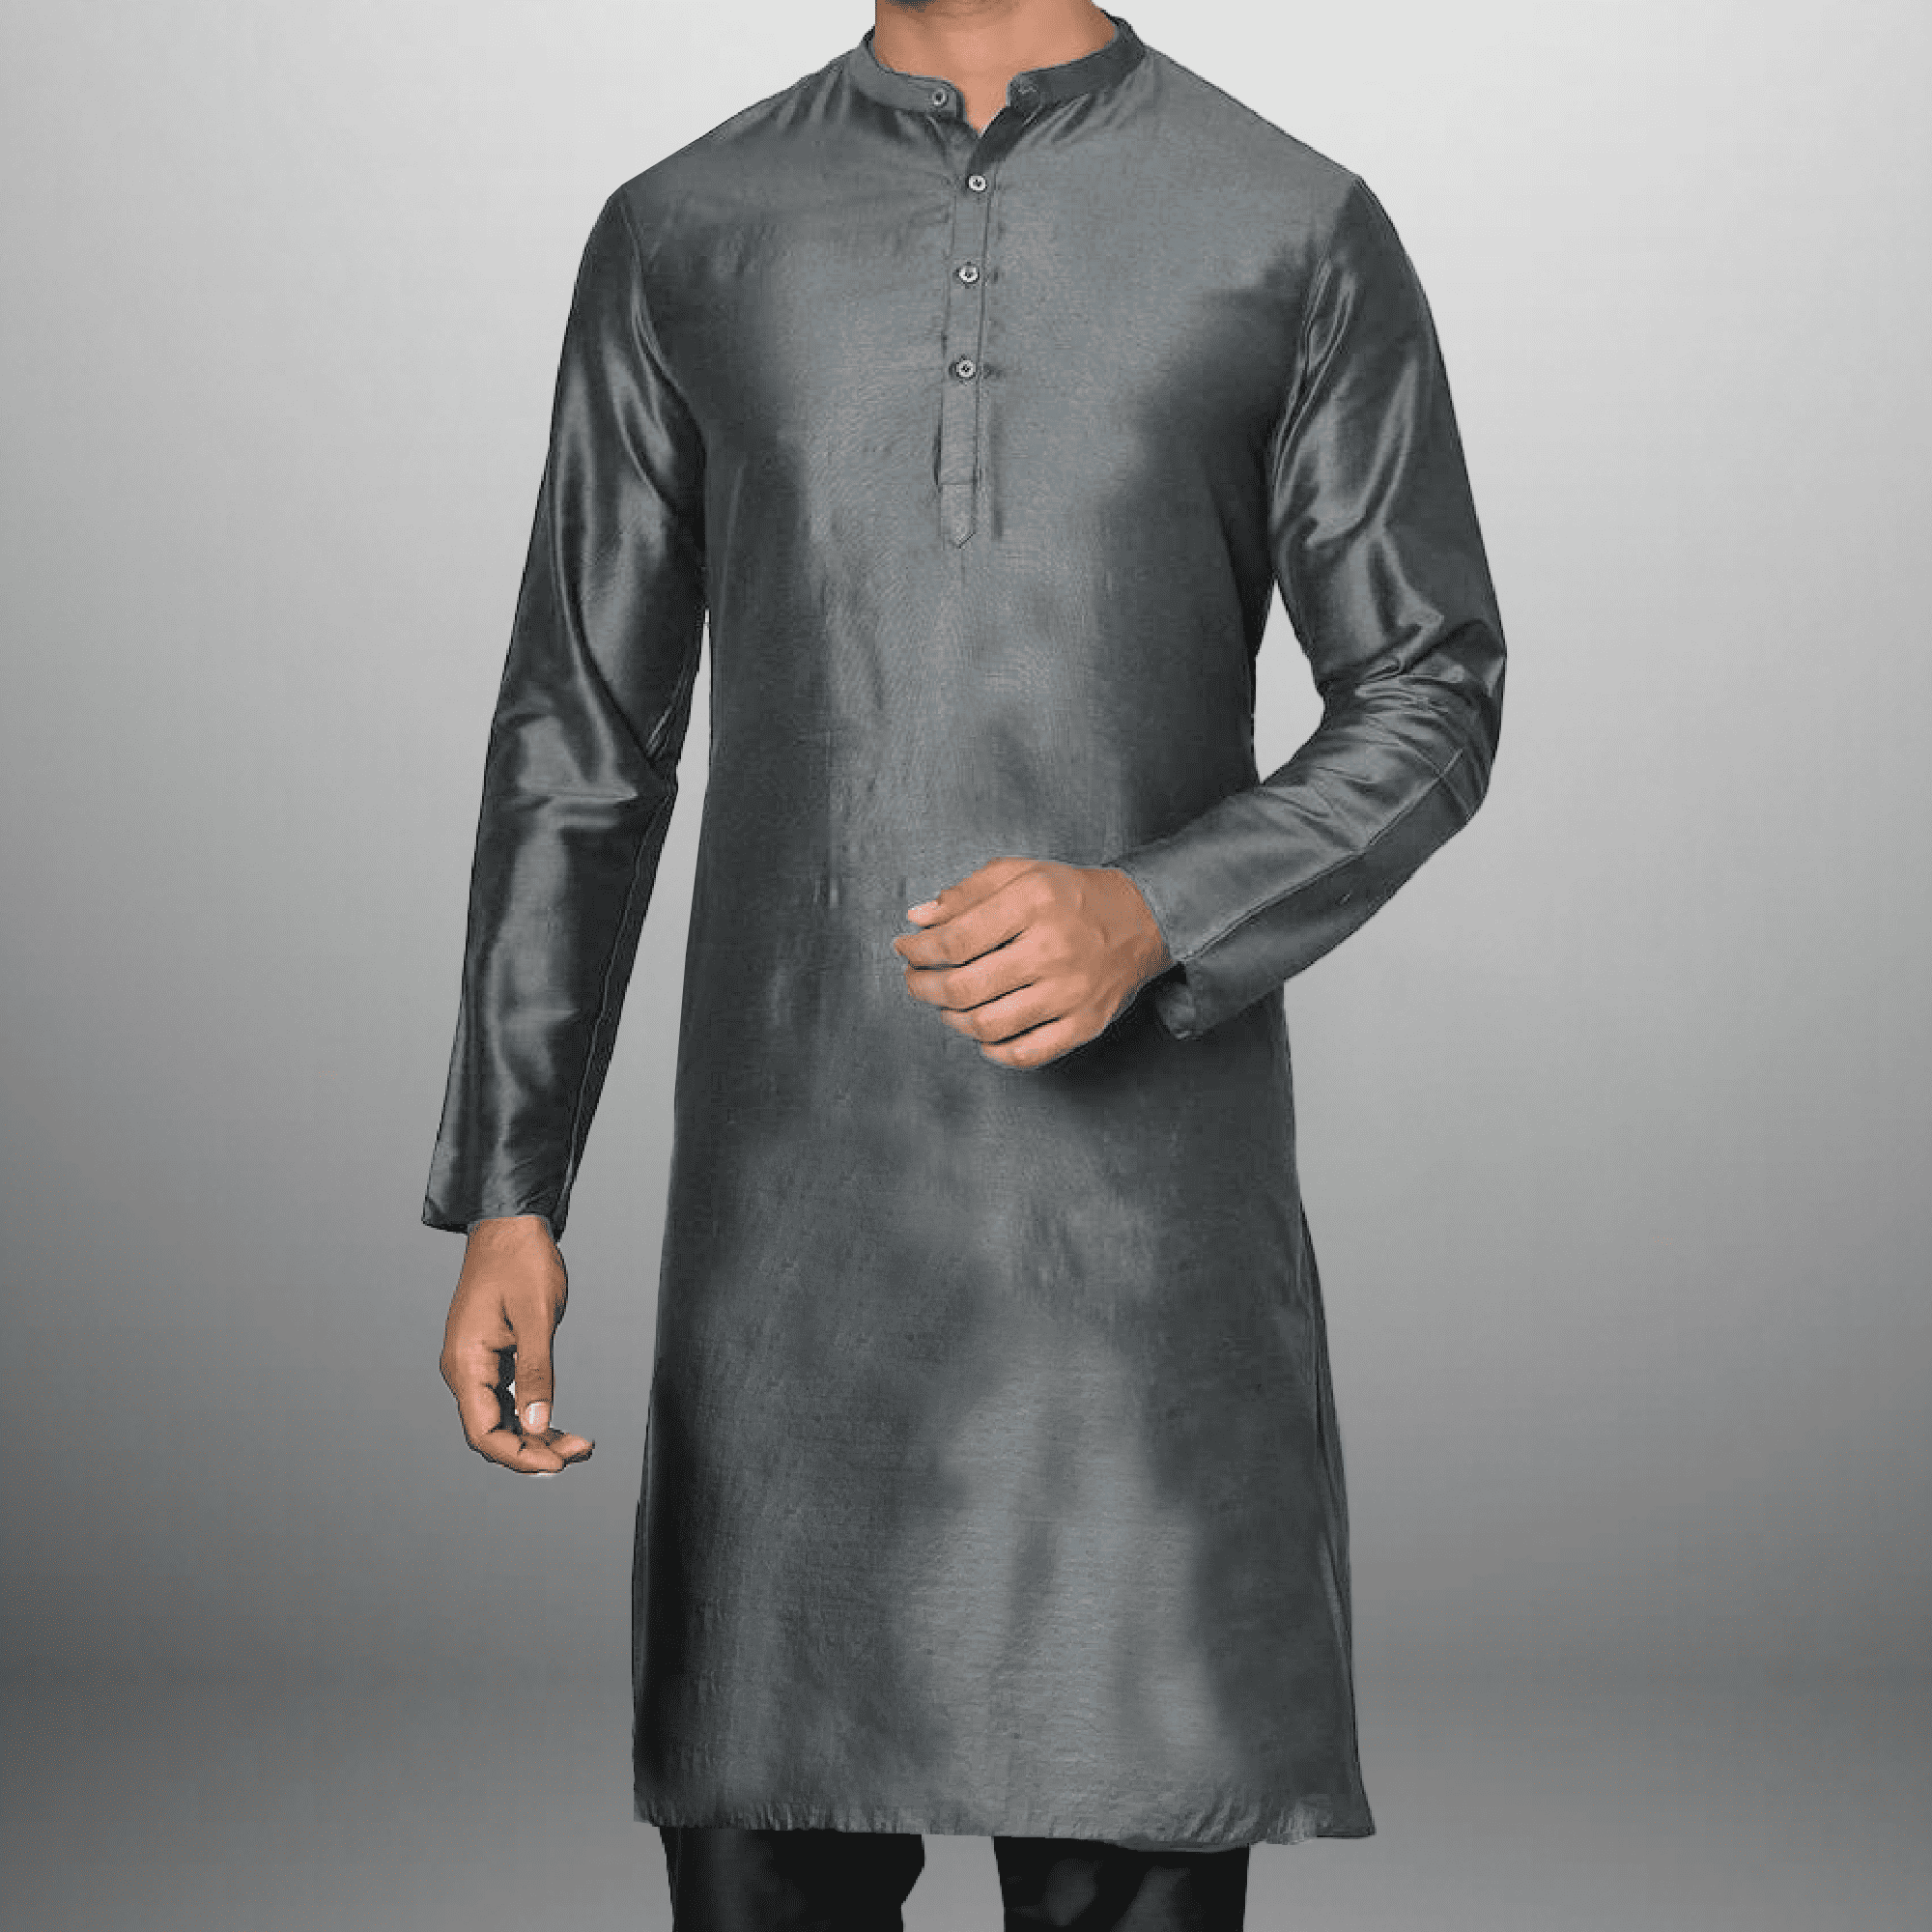 Men's Steel Gray Plain kurta with buttons-RMEK025